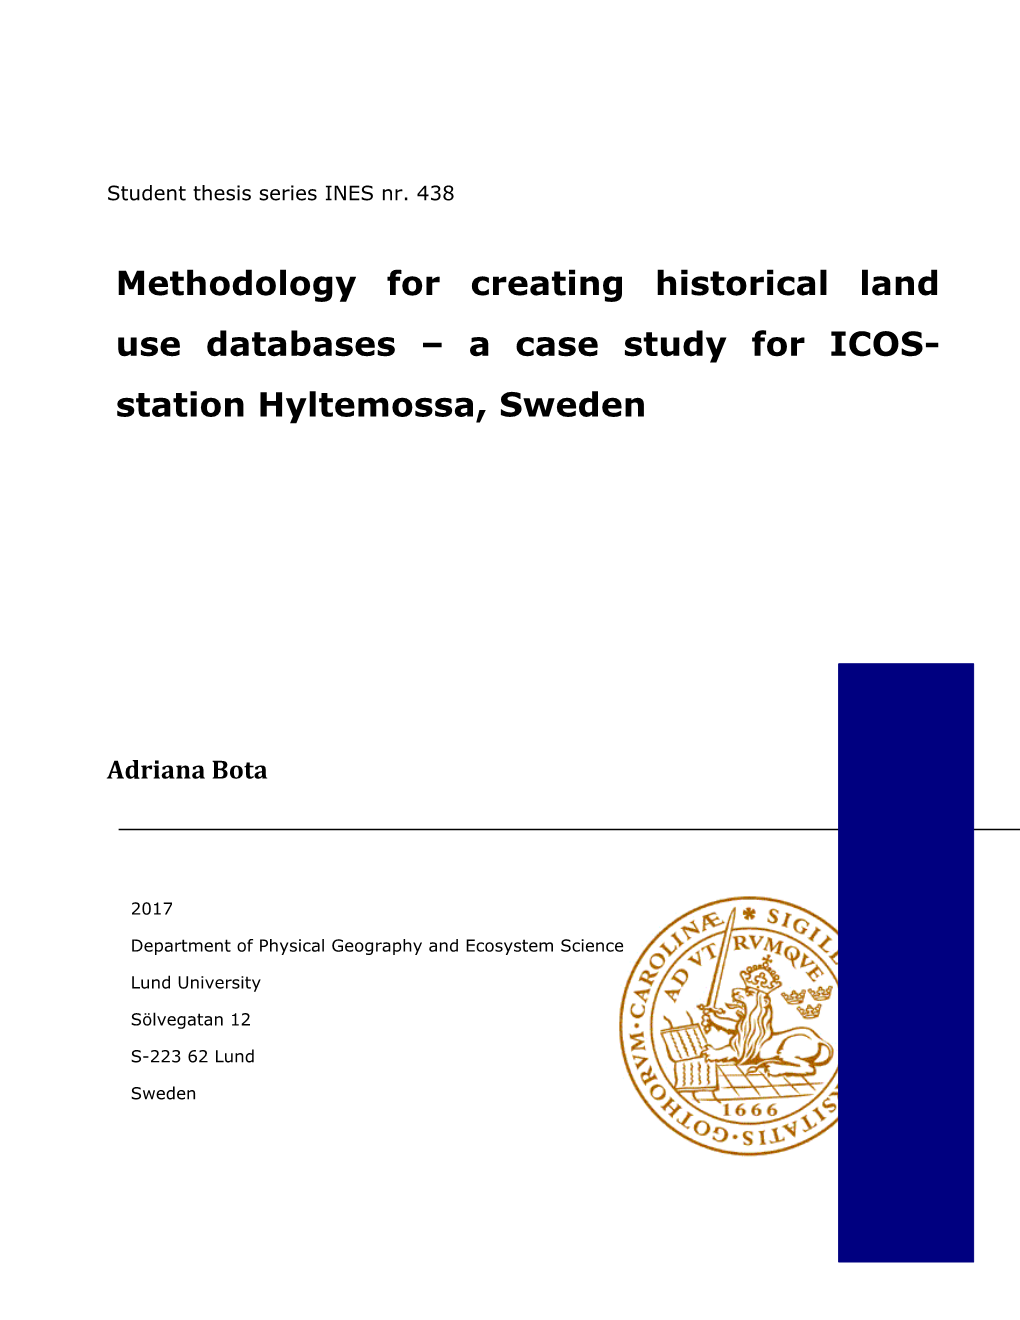 Methodology for Creating Historical Land